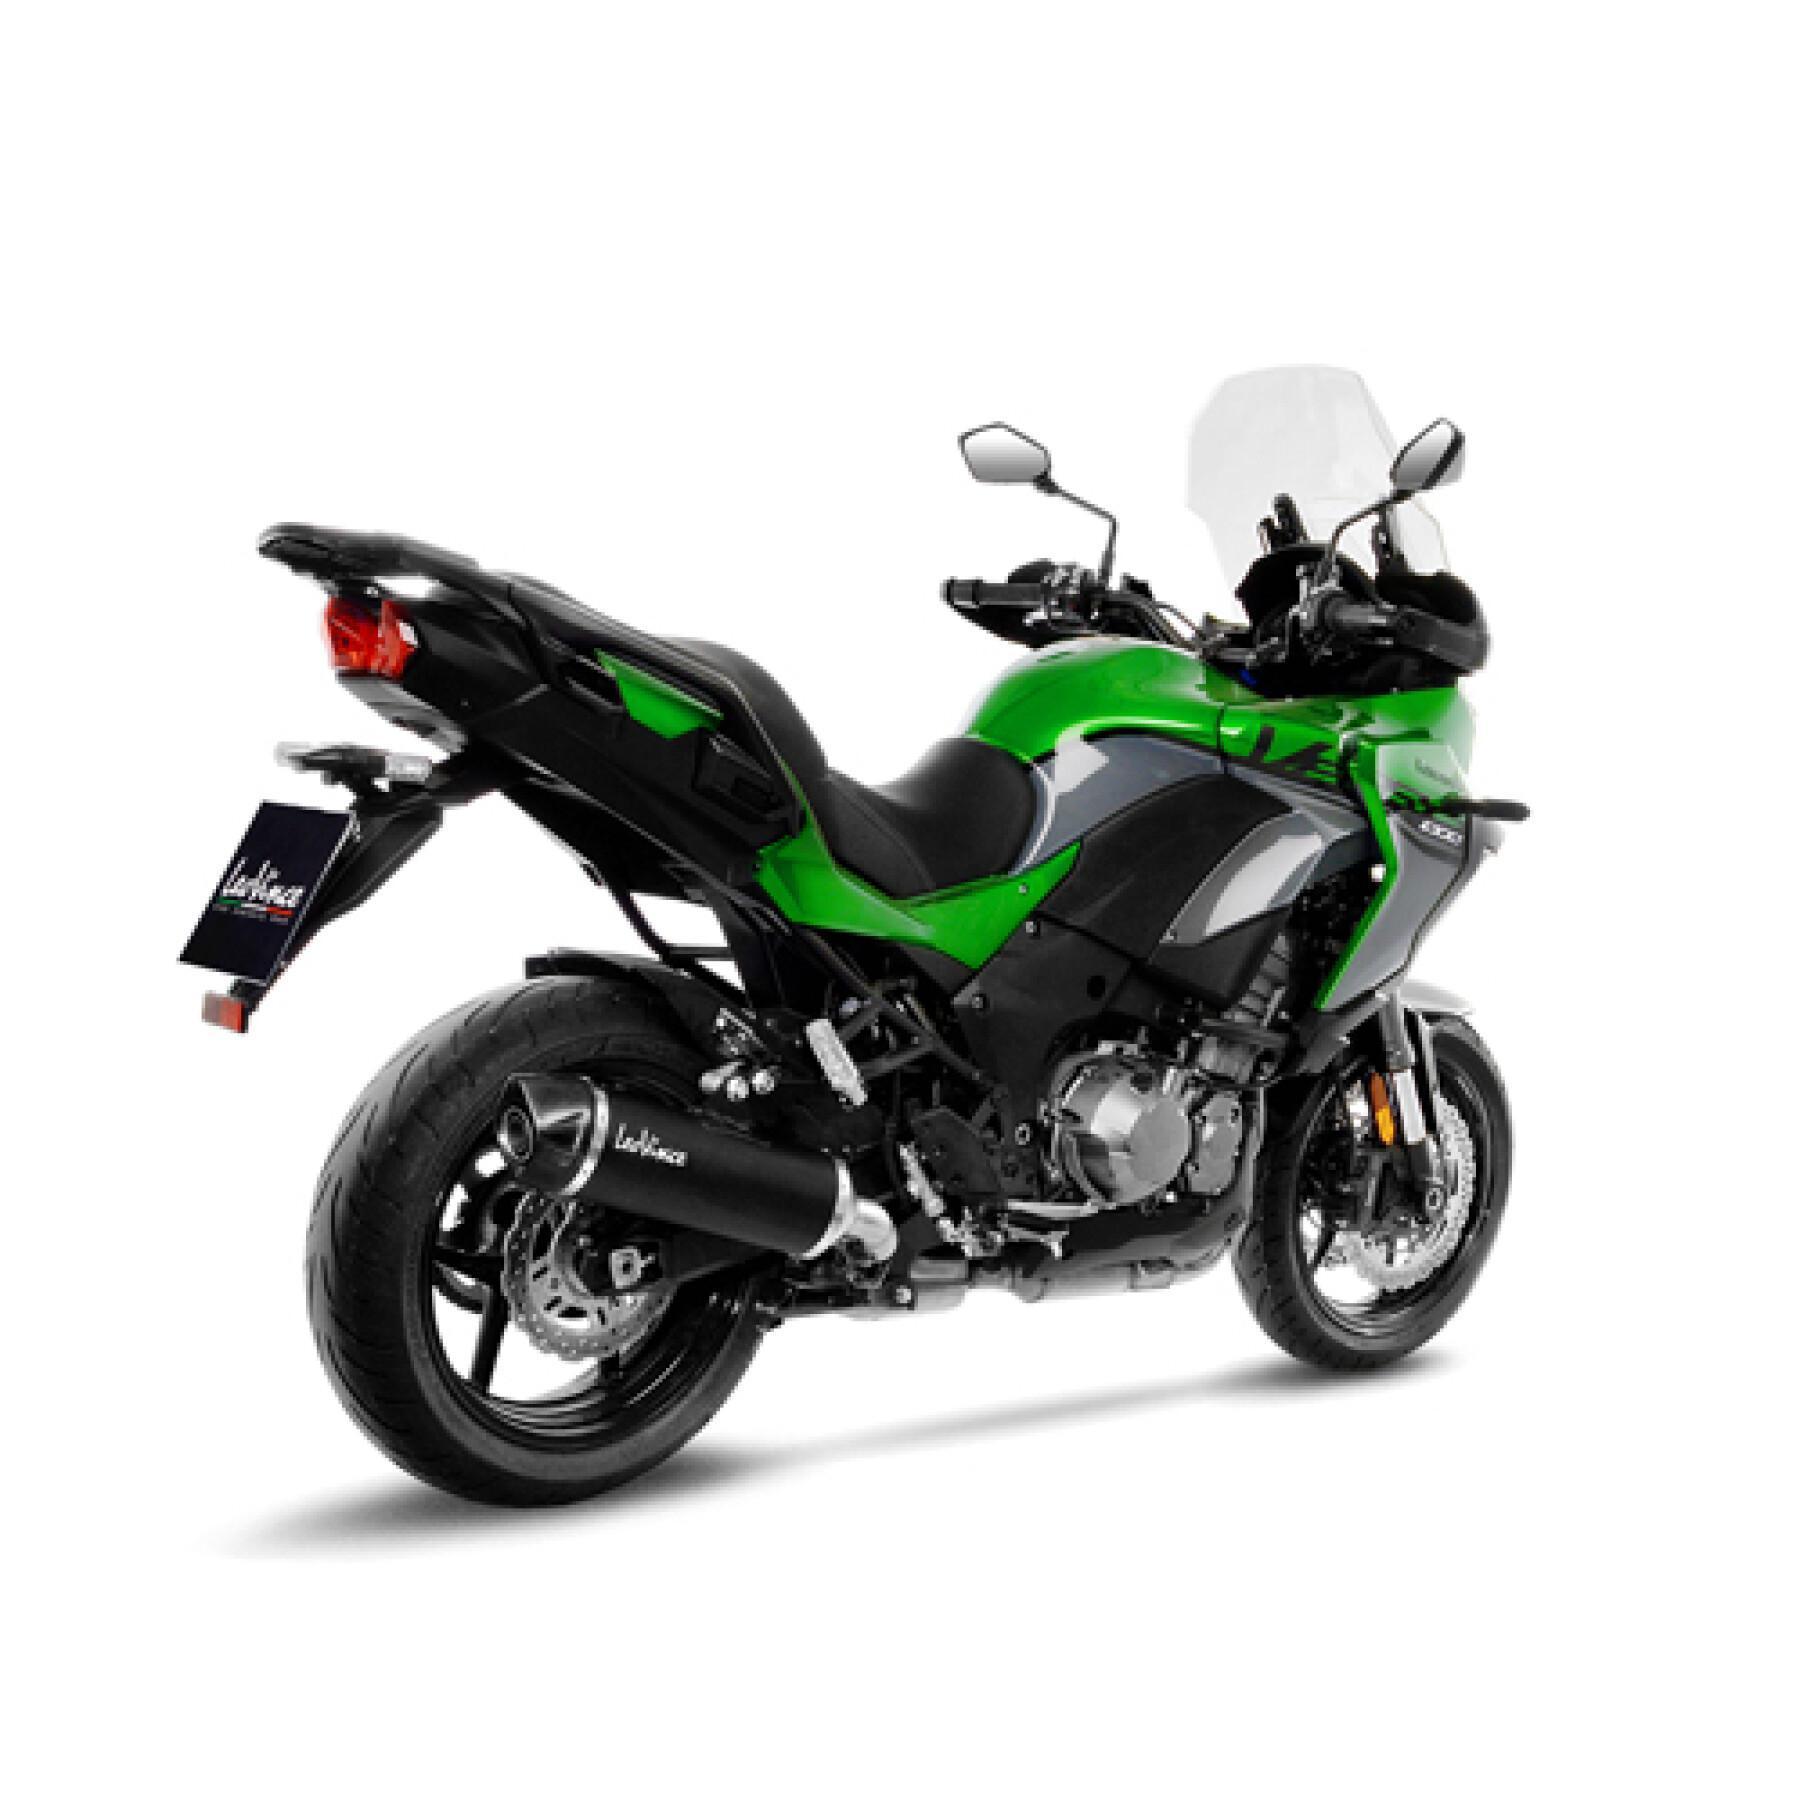 escape de la moto Leovince Nero Kawasaki Versys 1000 2019-2021